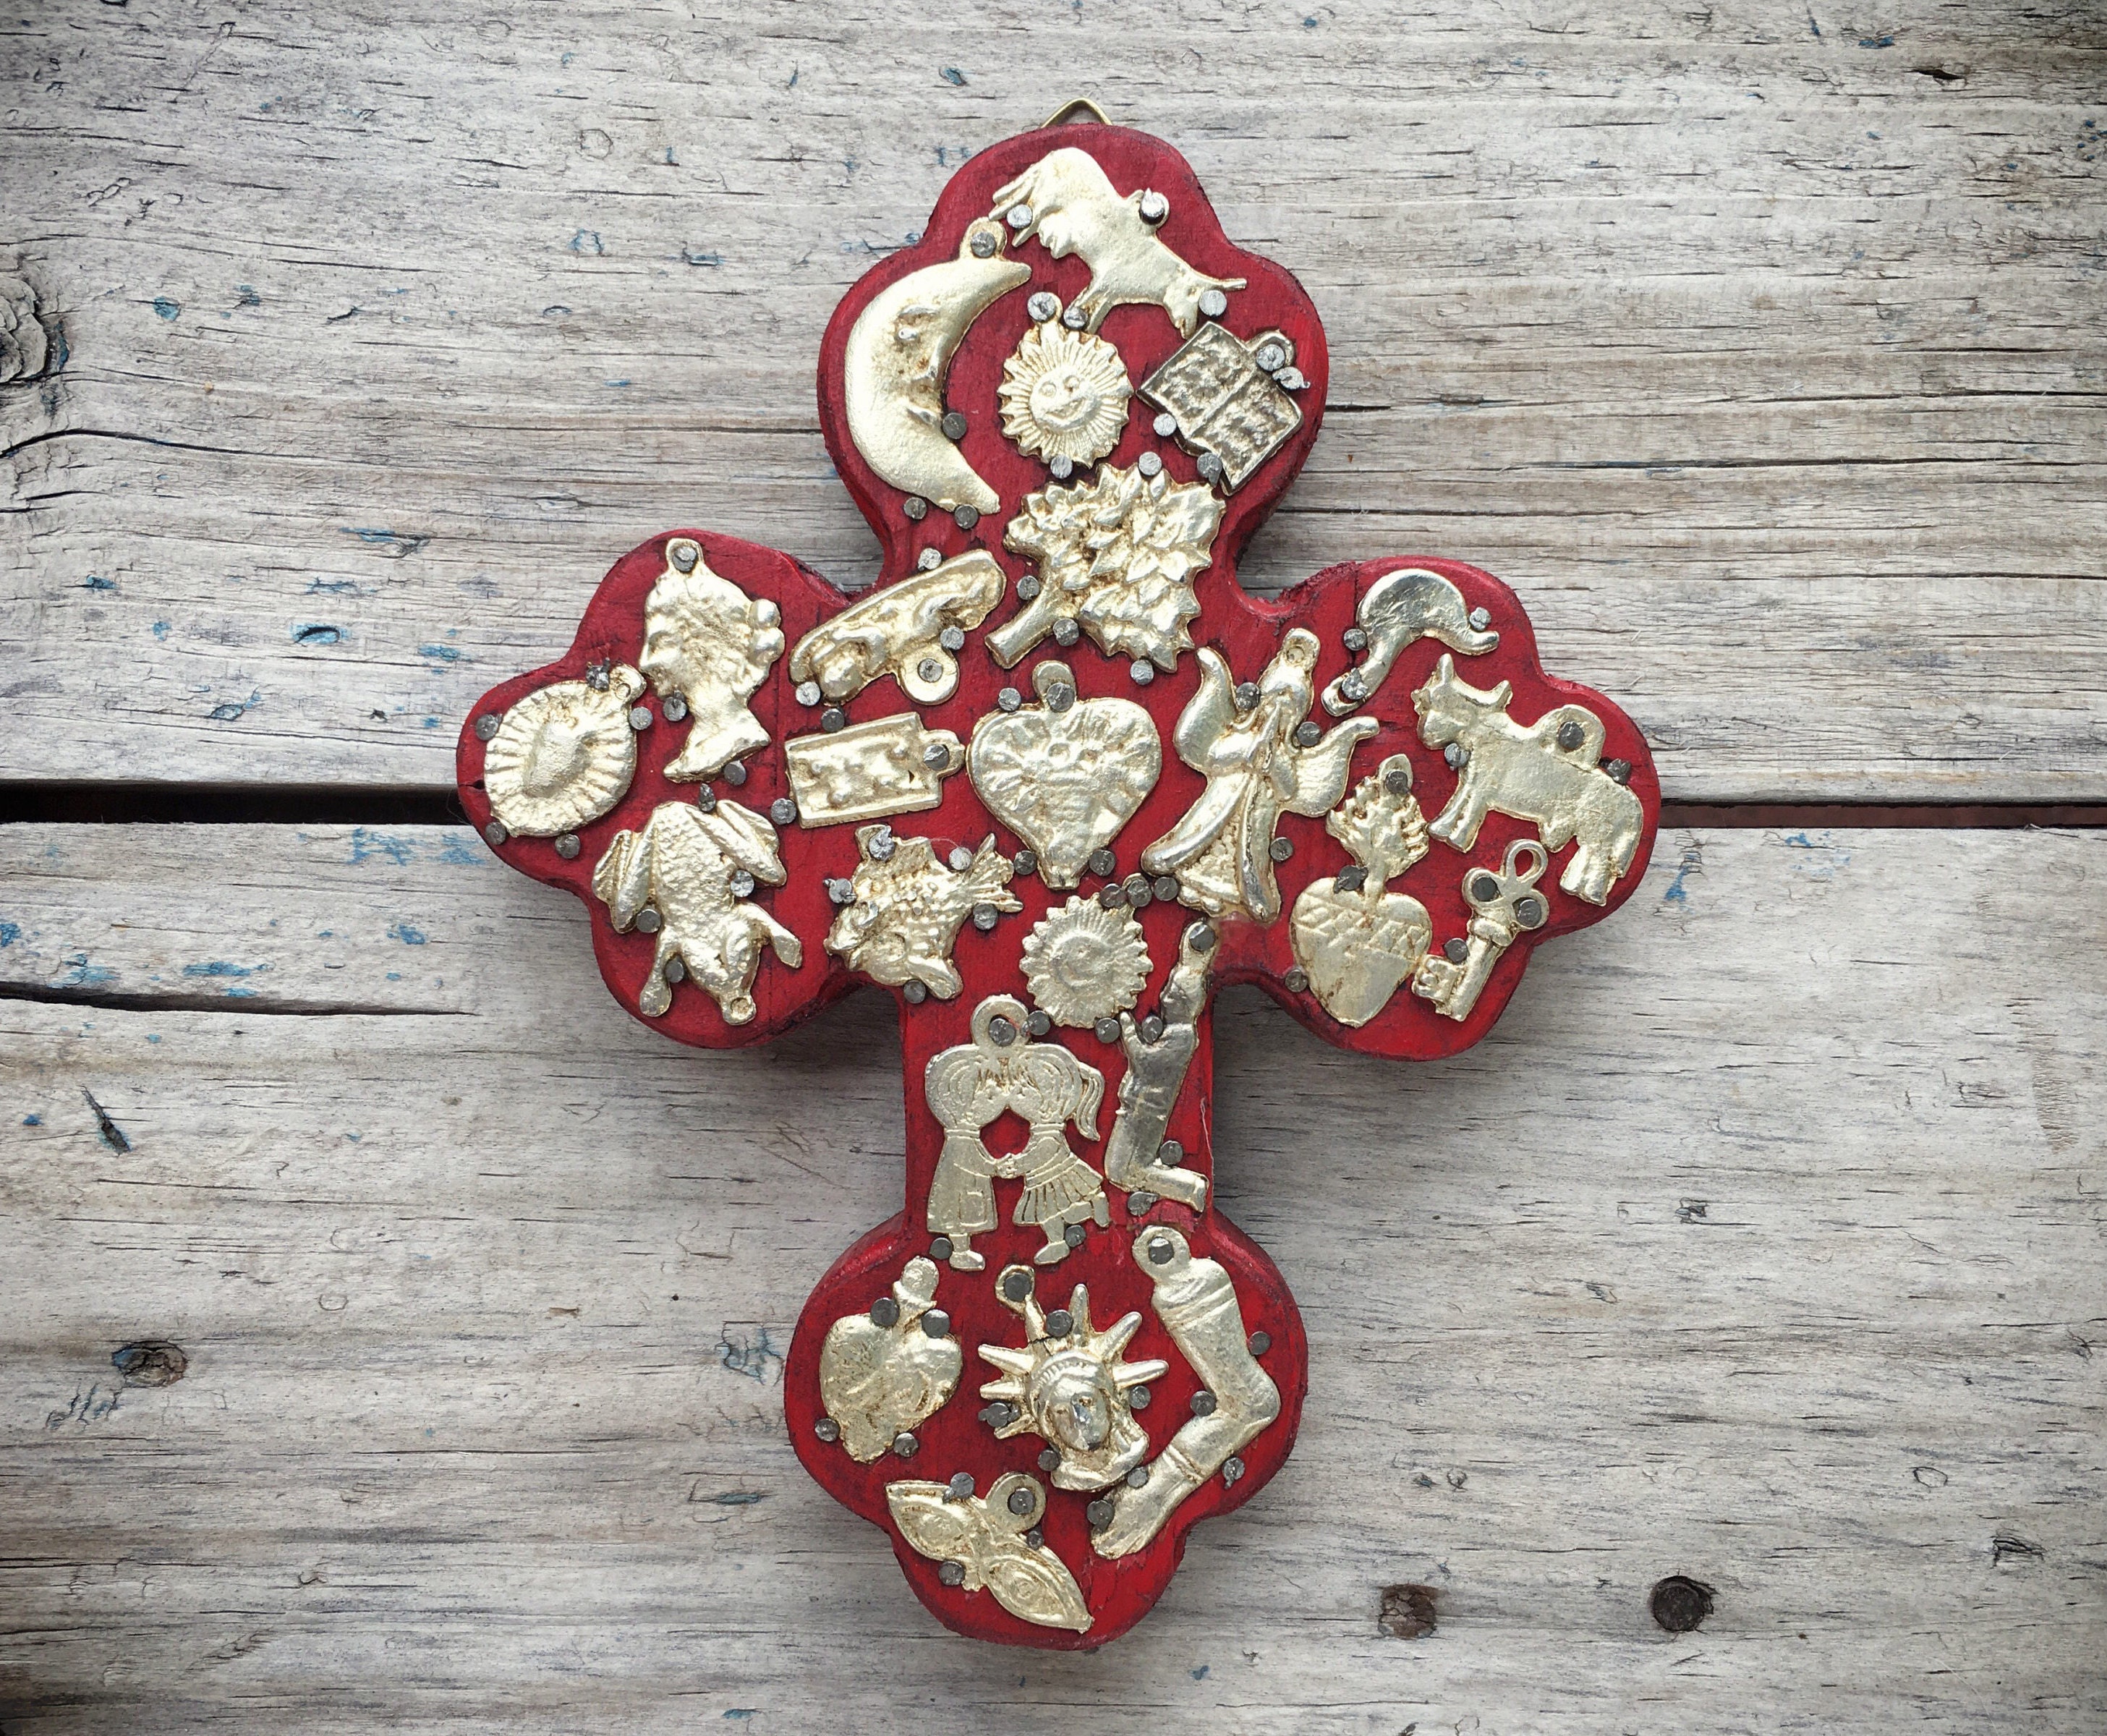 DIY Ornate Wooden Crosses - Positively Splendid {Crafts, Sewing